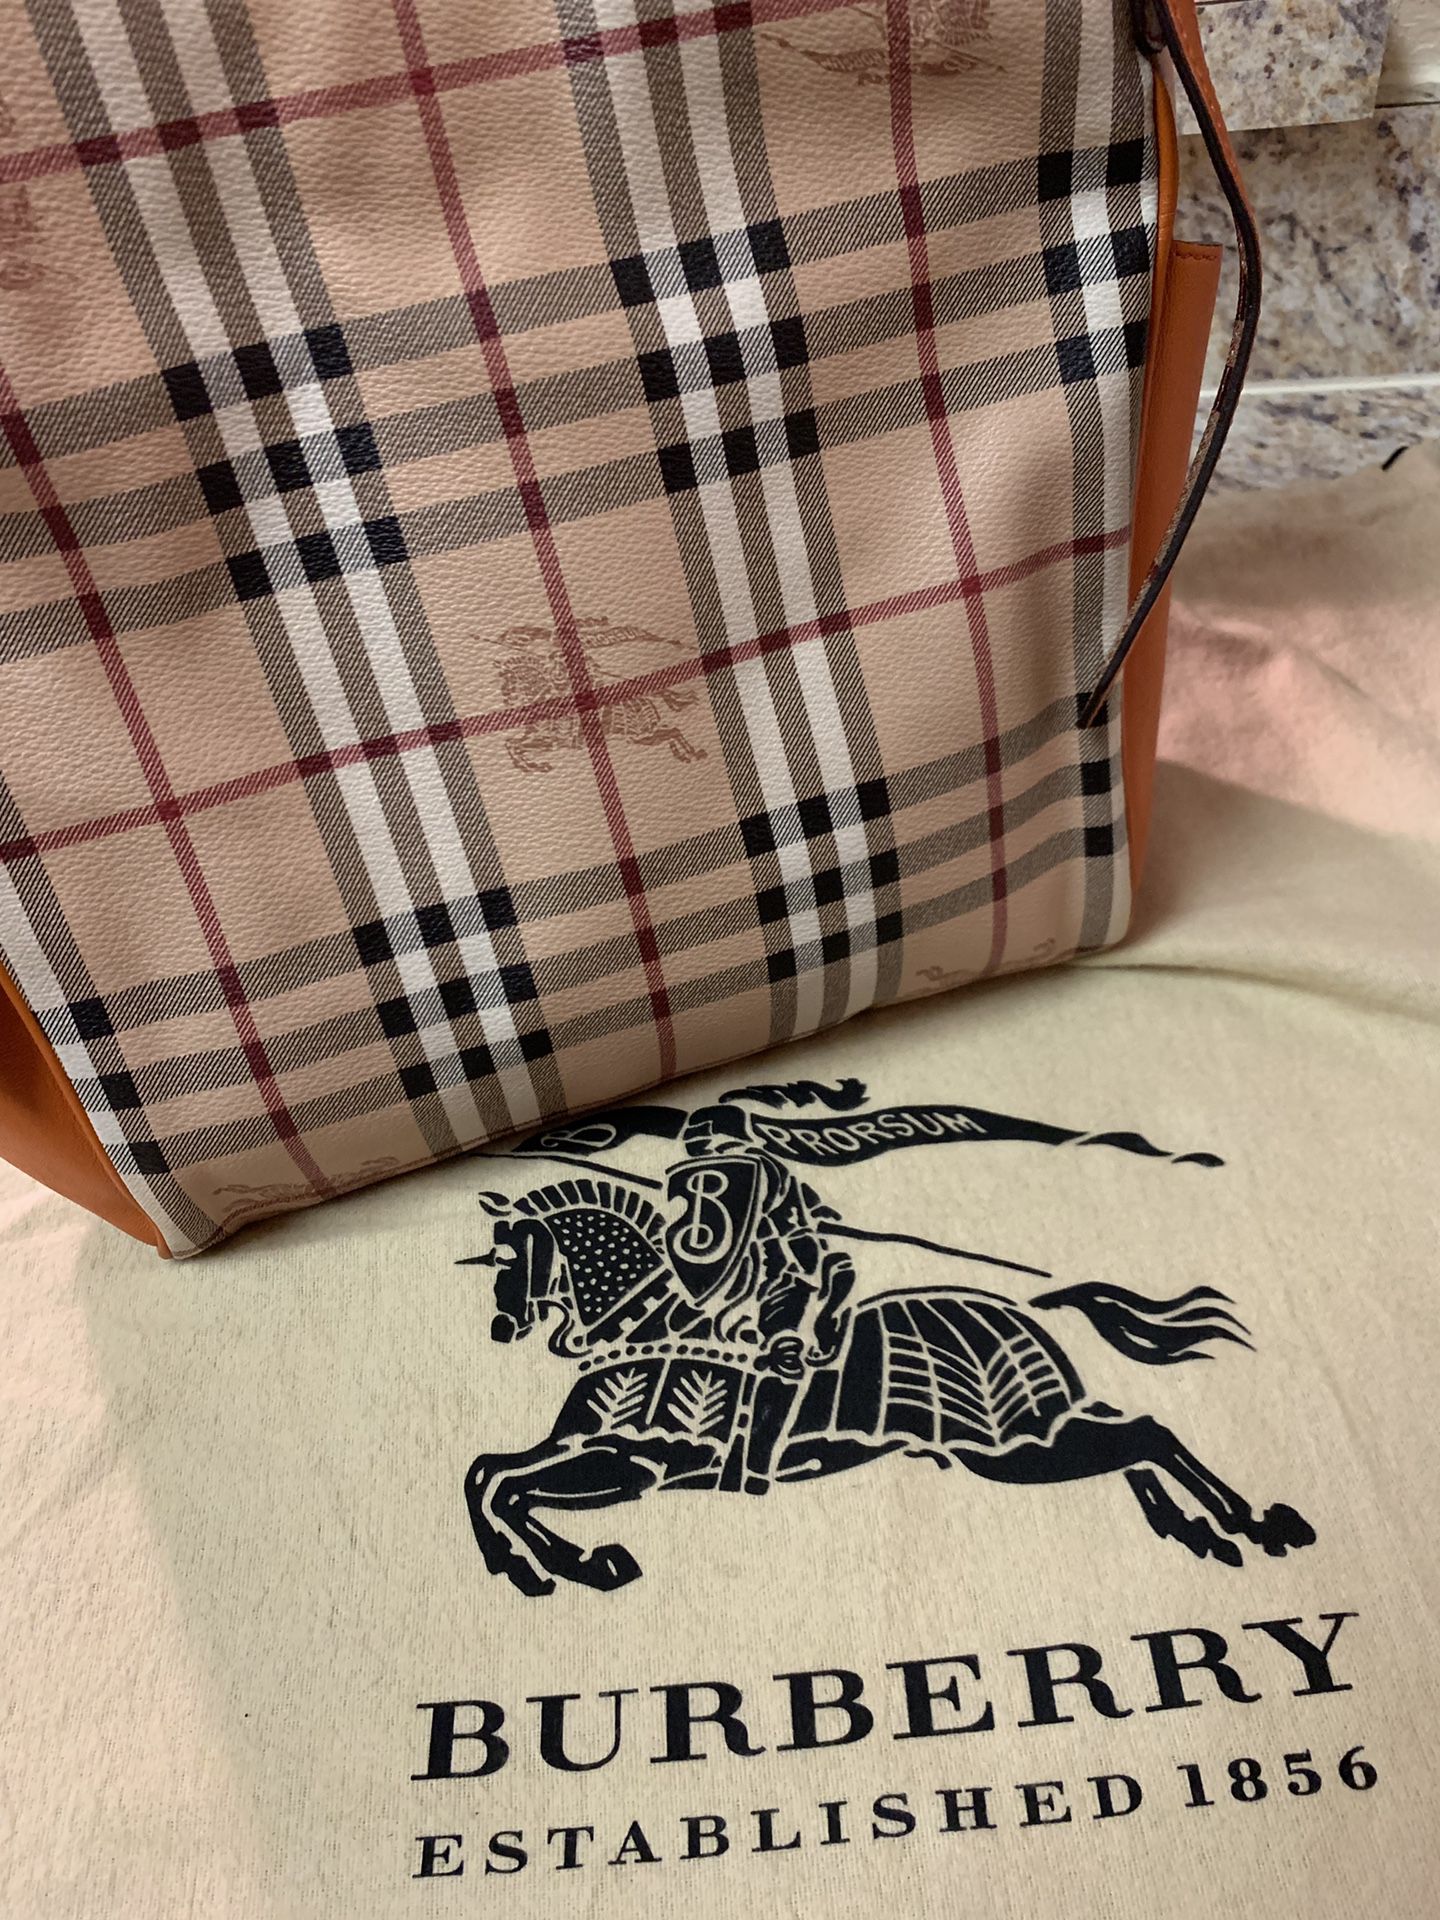 Original burberry bag Orange color/ SALE